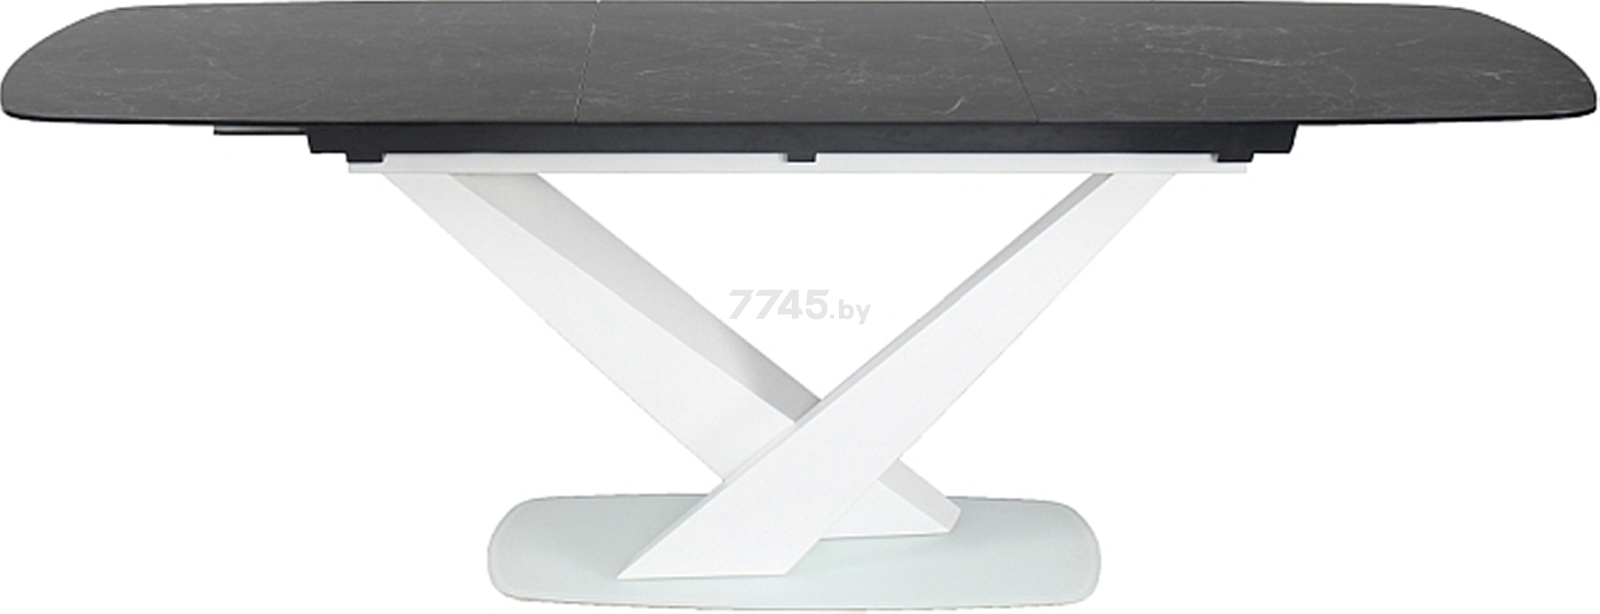 Стол кухонный SIGNAL Cassino II Ceramic 160 графит мрамор/белый матовый 160-220х90х76 см (CASSINOGB160) - Фото 4